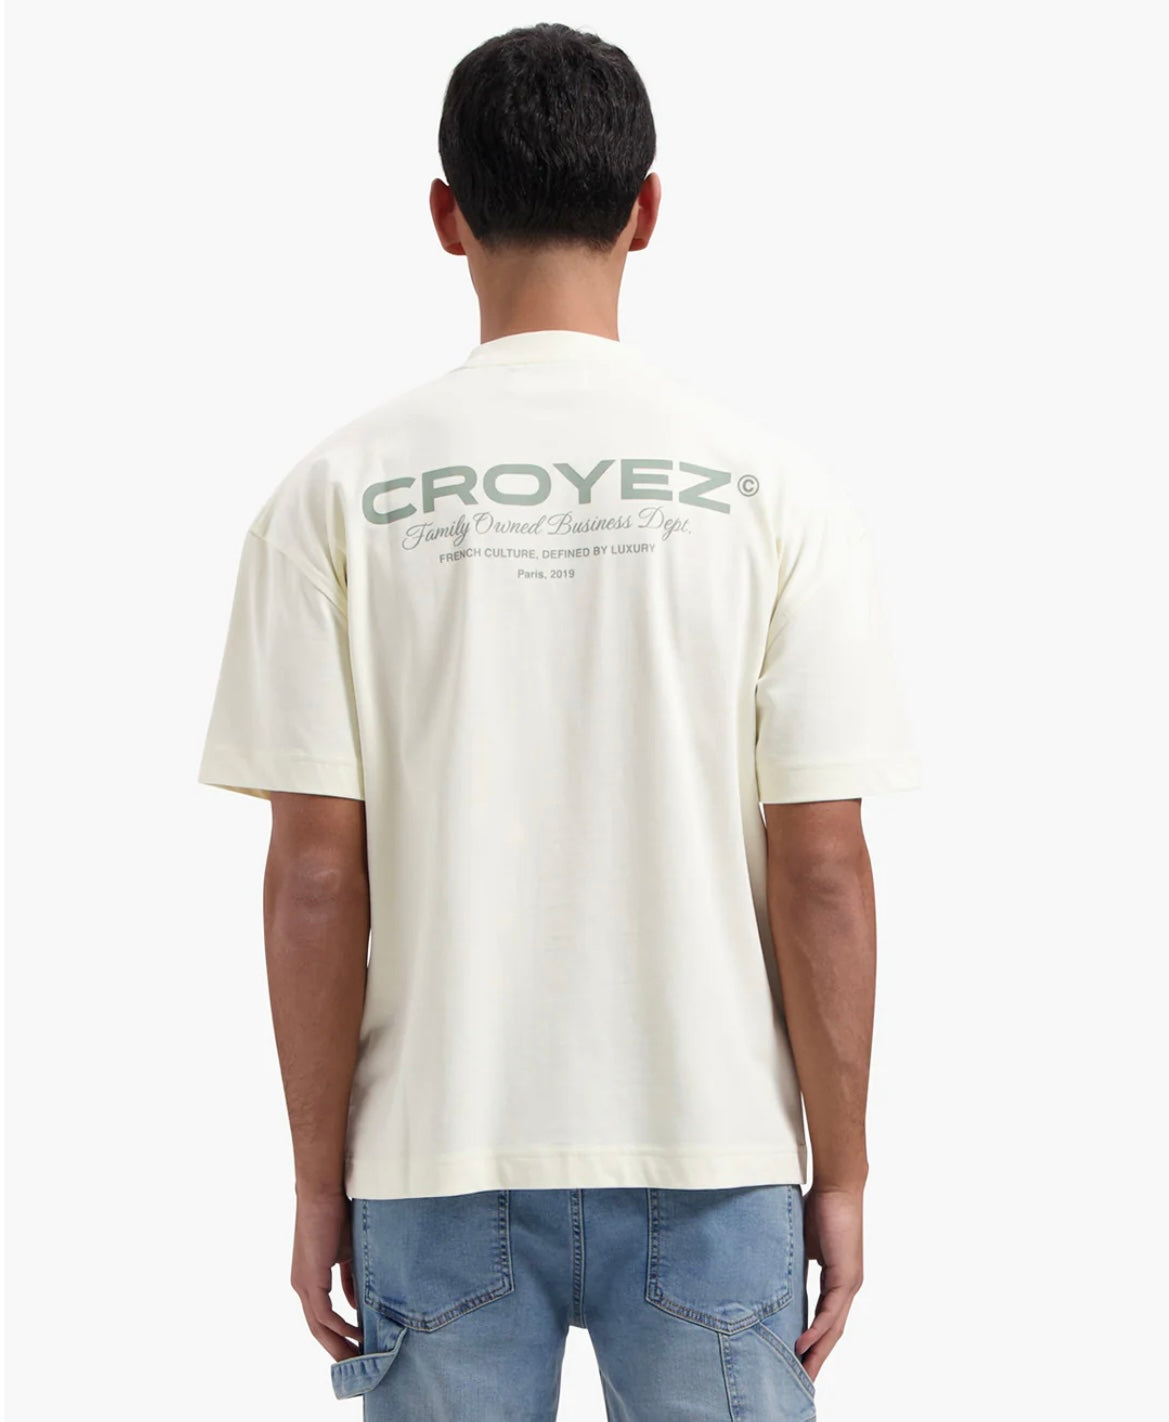 Croyez family owned business t-shirt - buttercream